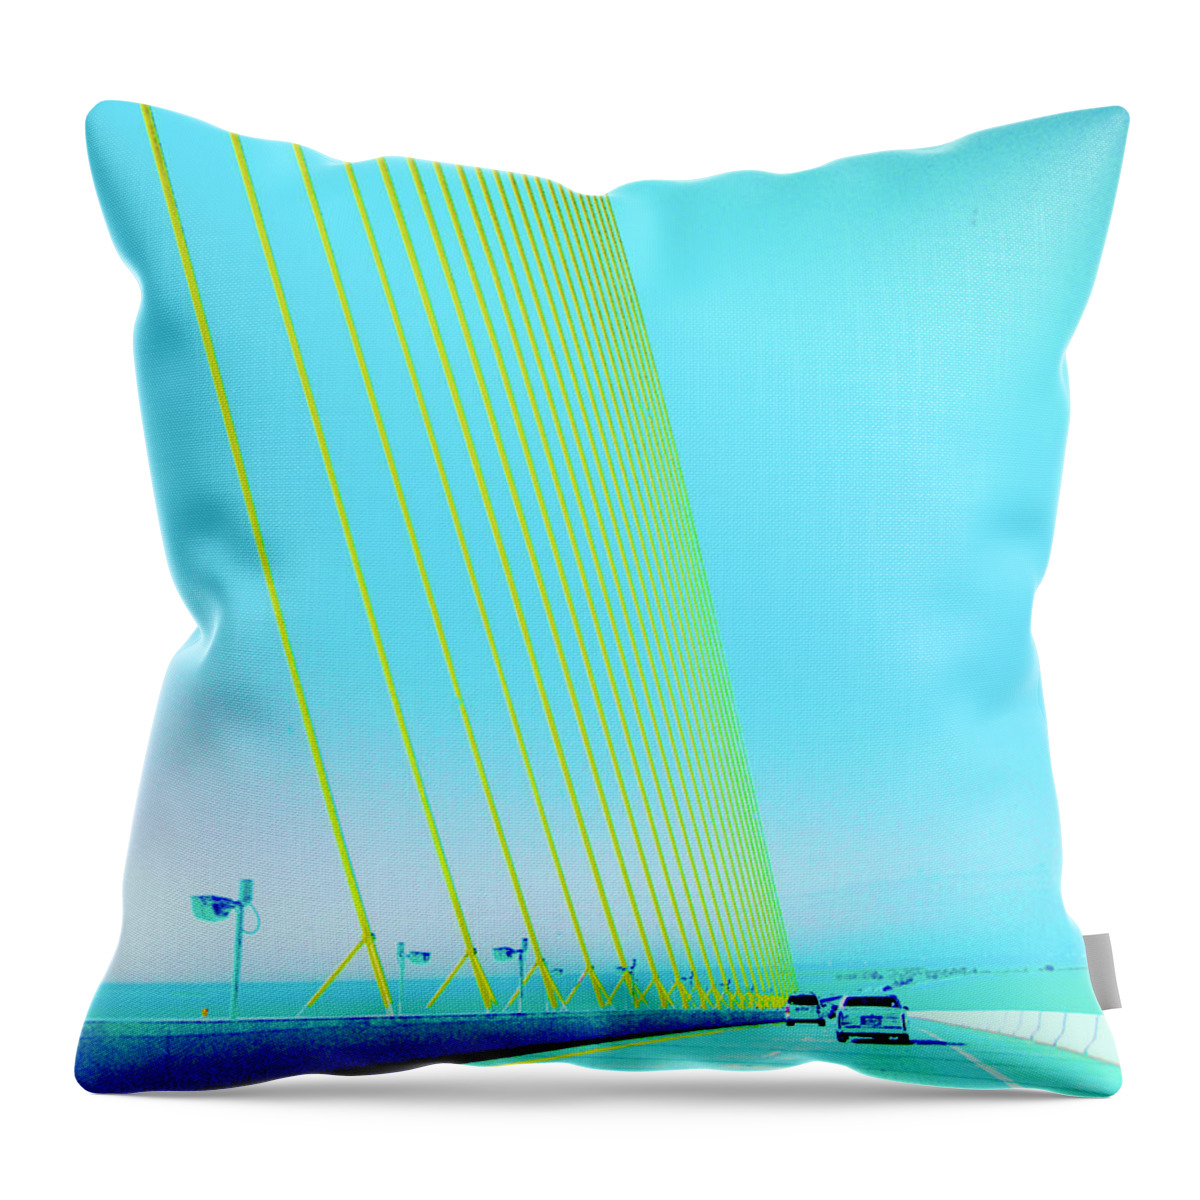 Tampa Throw Pillow featuring the photograph Sunshine Bridge by Lizi Beard-Ward